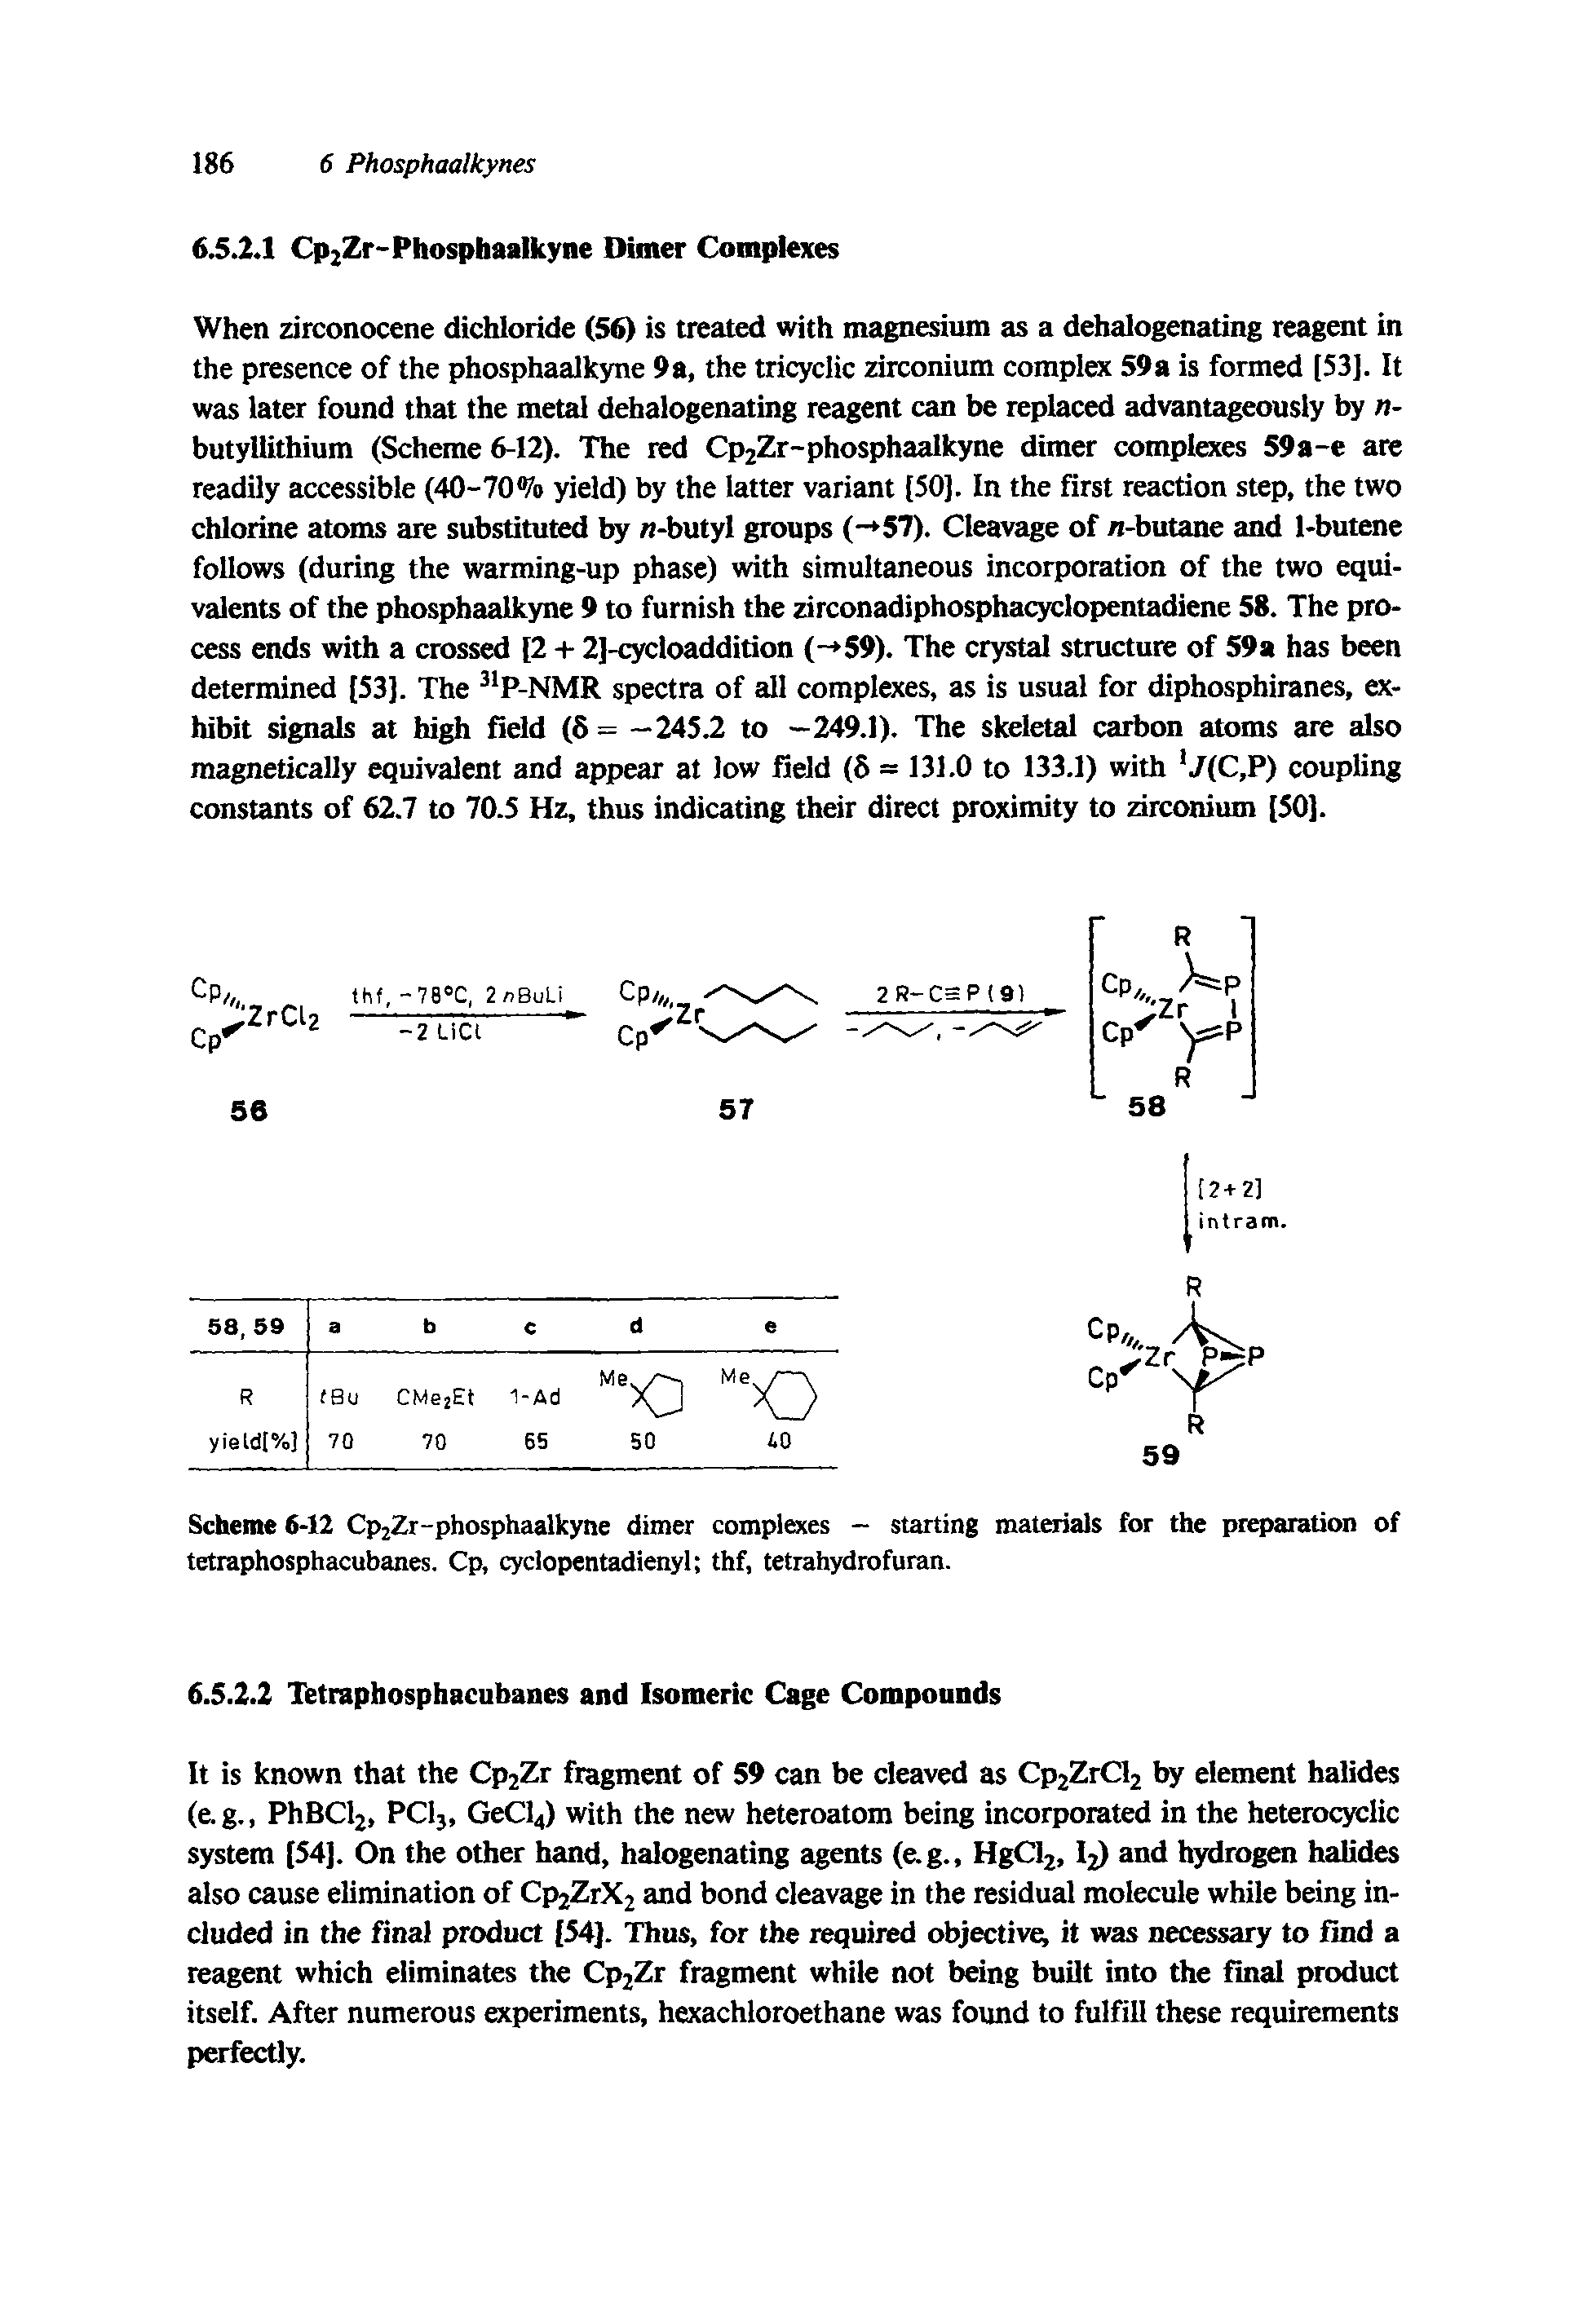 Scheme 6-12 Cp2Zr-phosphaalkyne dimer complexes - starting materials for the preparation of tetraphosphacubanes. Cp, cyclopentadienyl thf, tetrahydrofuran.